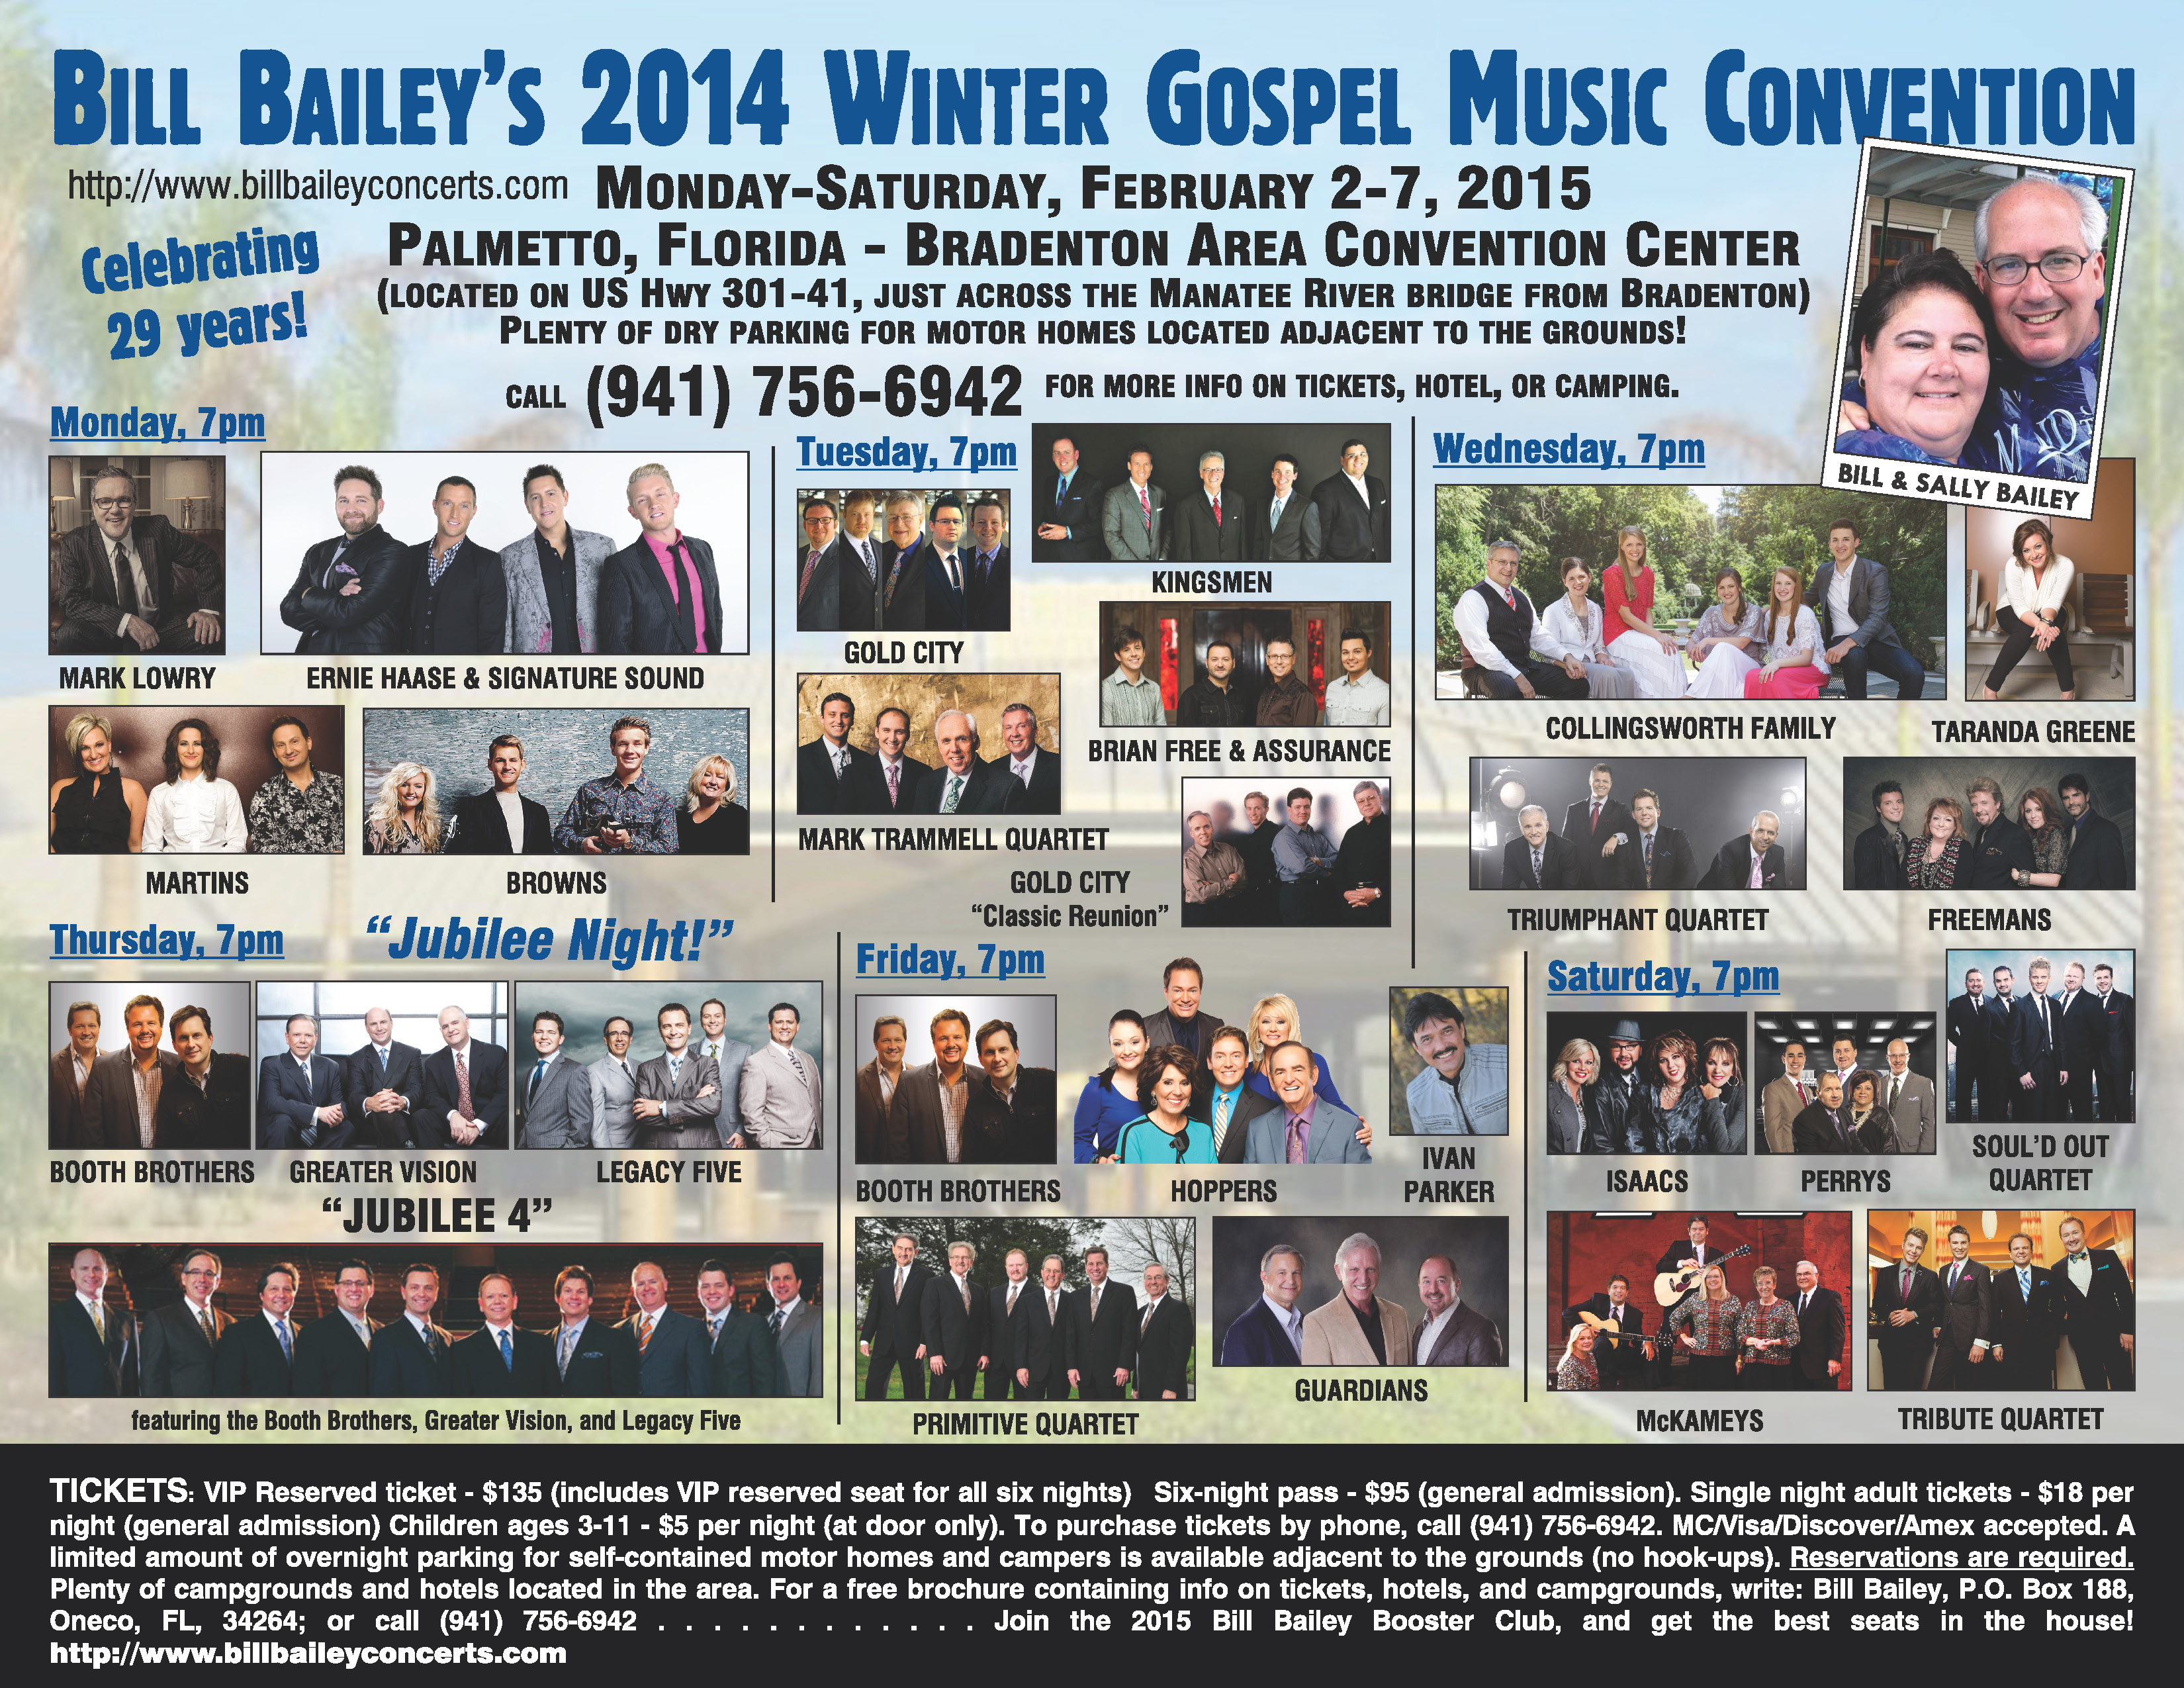 Bill Bailey's 2015 Winter Gospel Music Convention returns to Palmetto, FL!